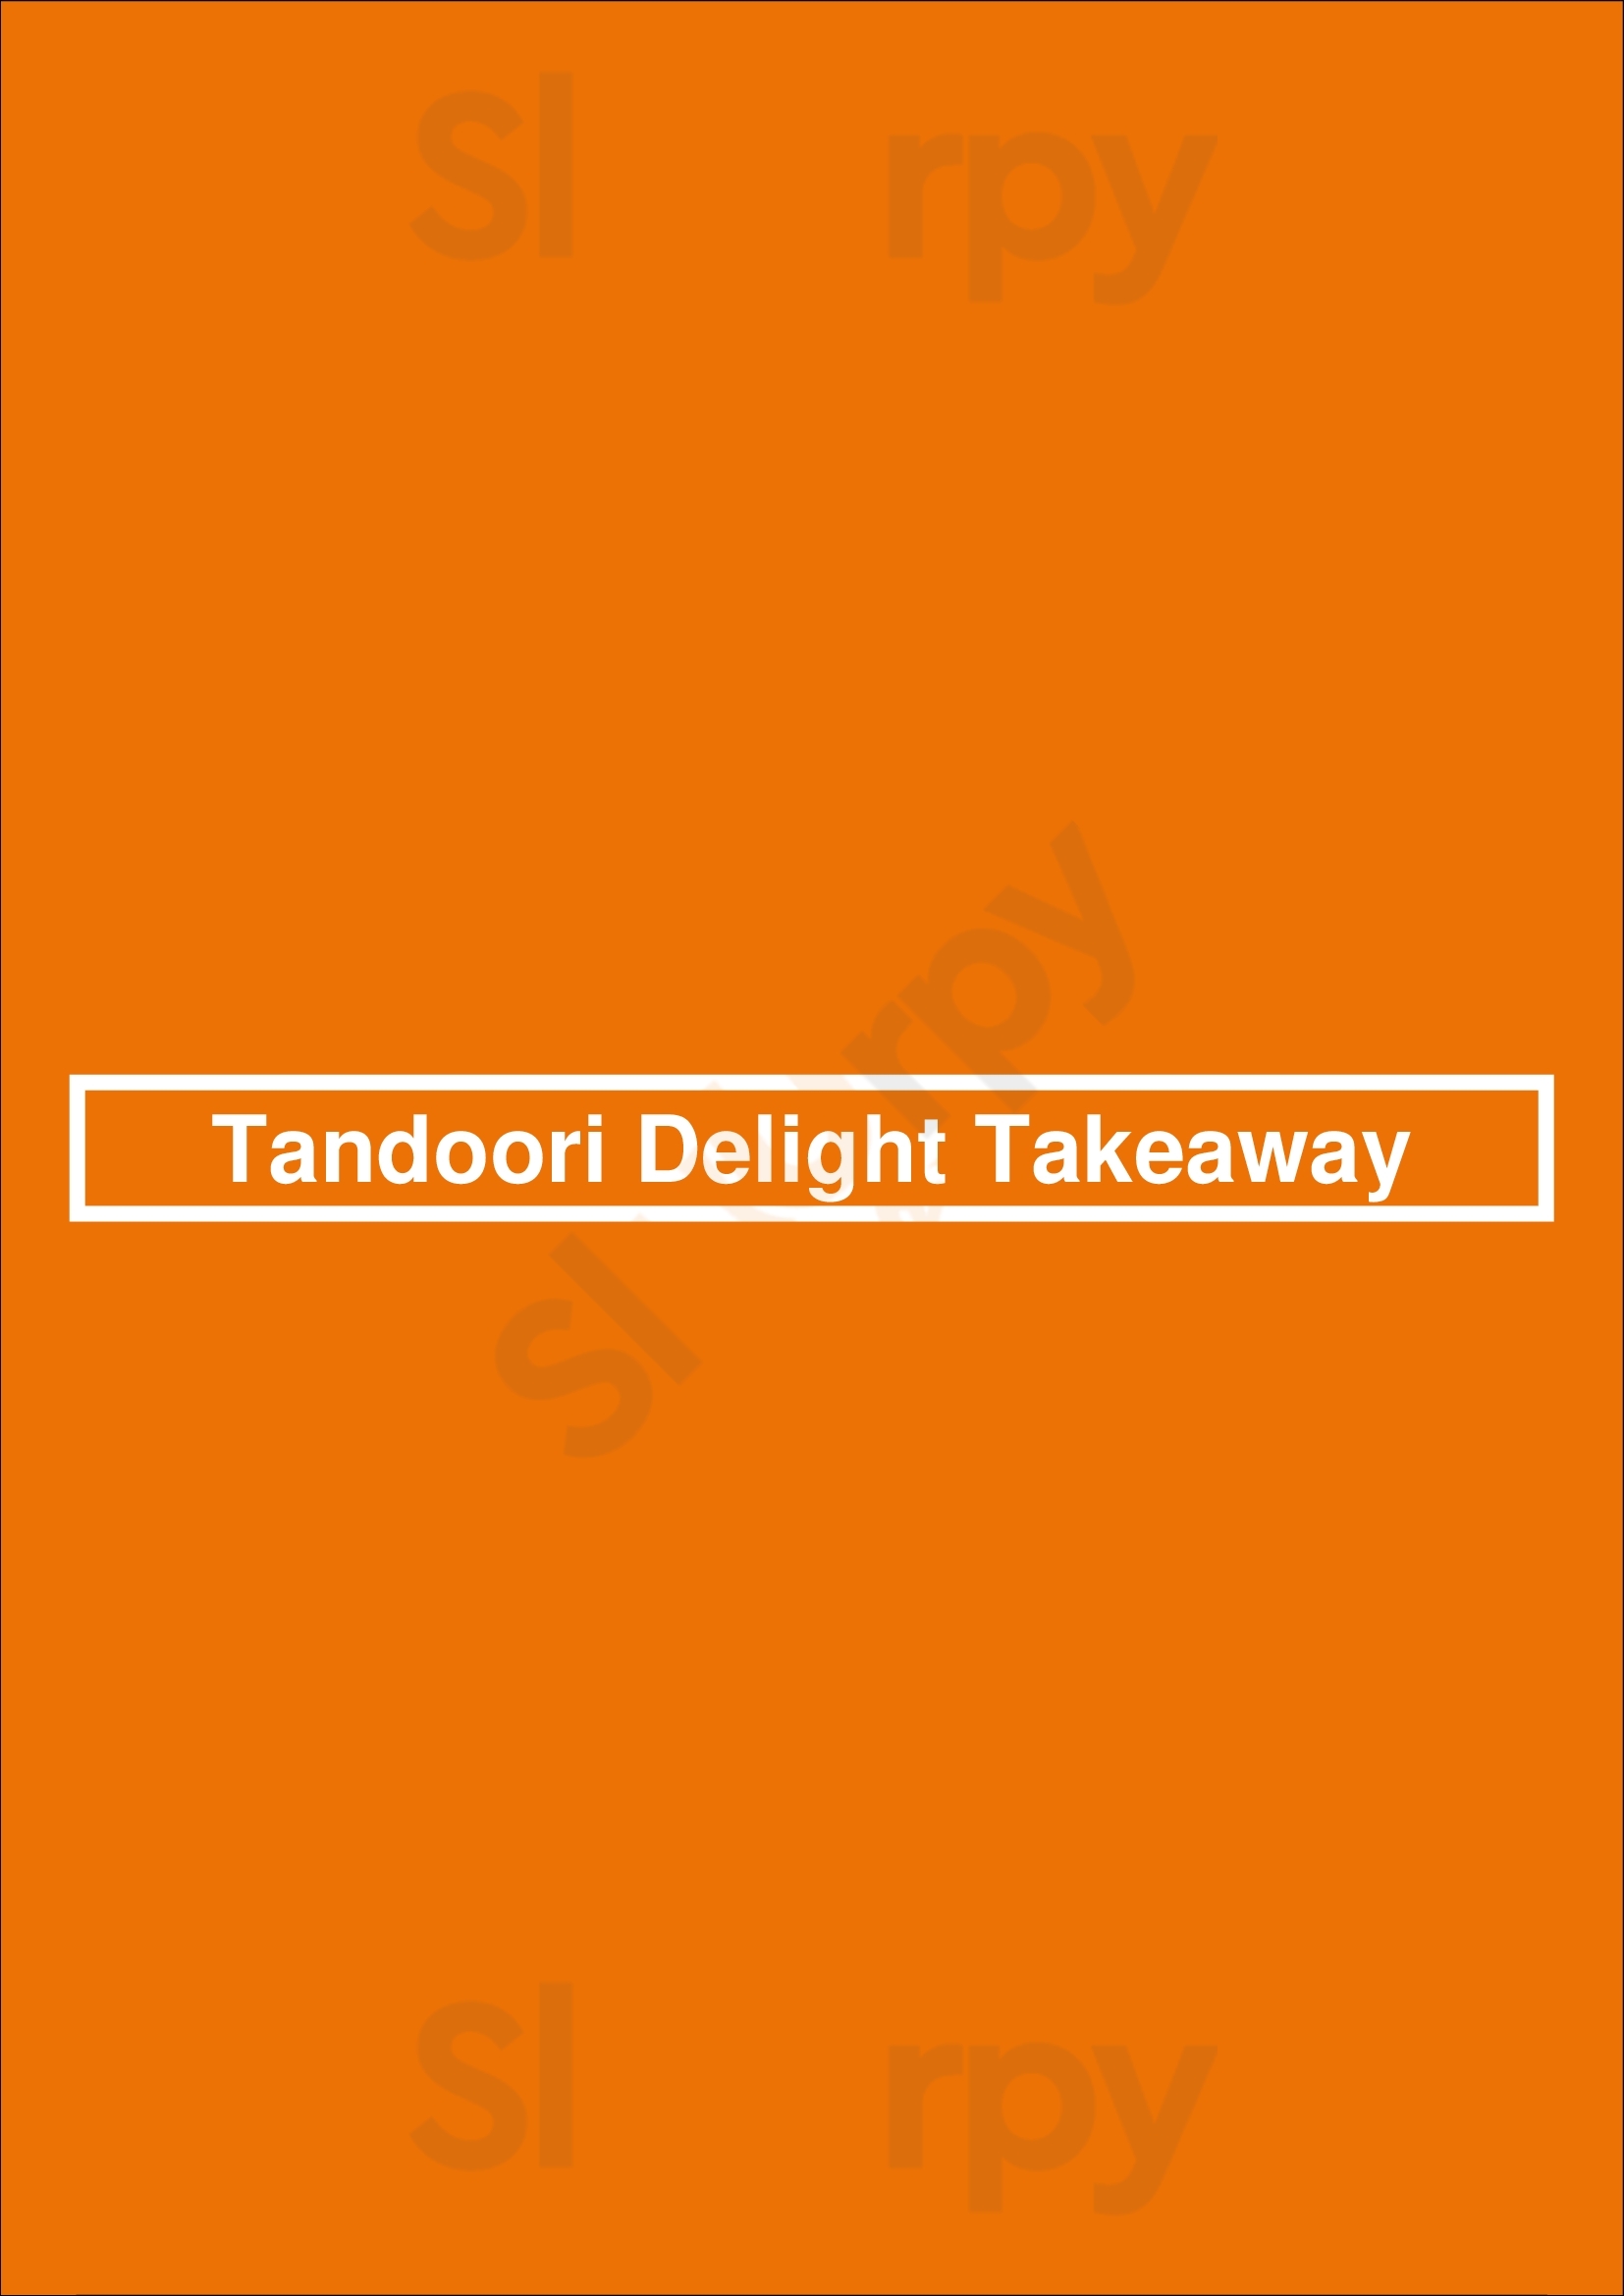 Tandoori Delight Takeaway Chesterfield Menu - 1